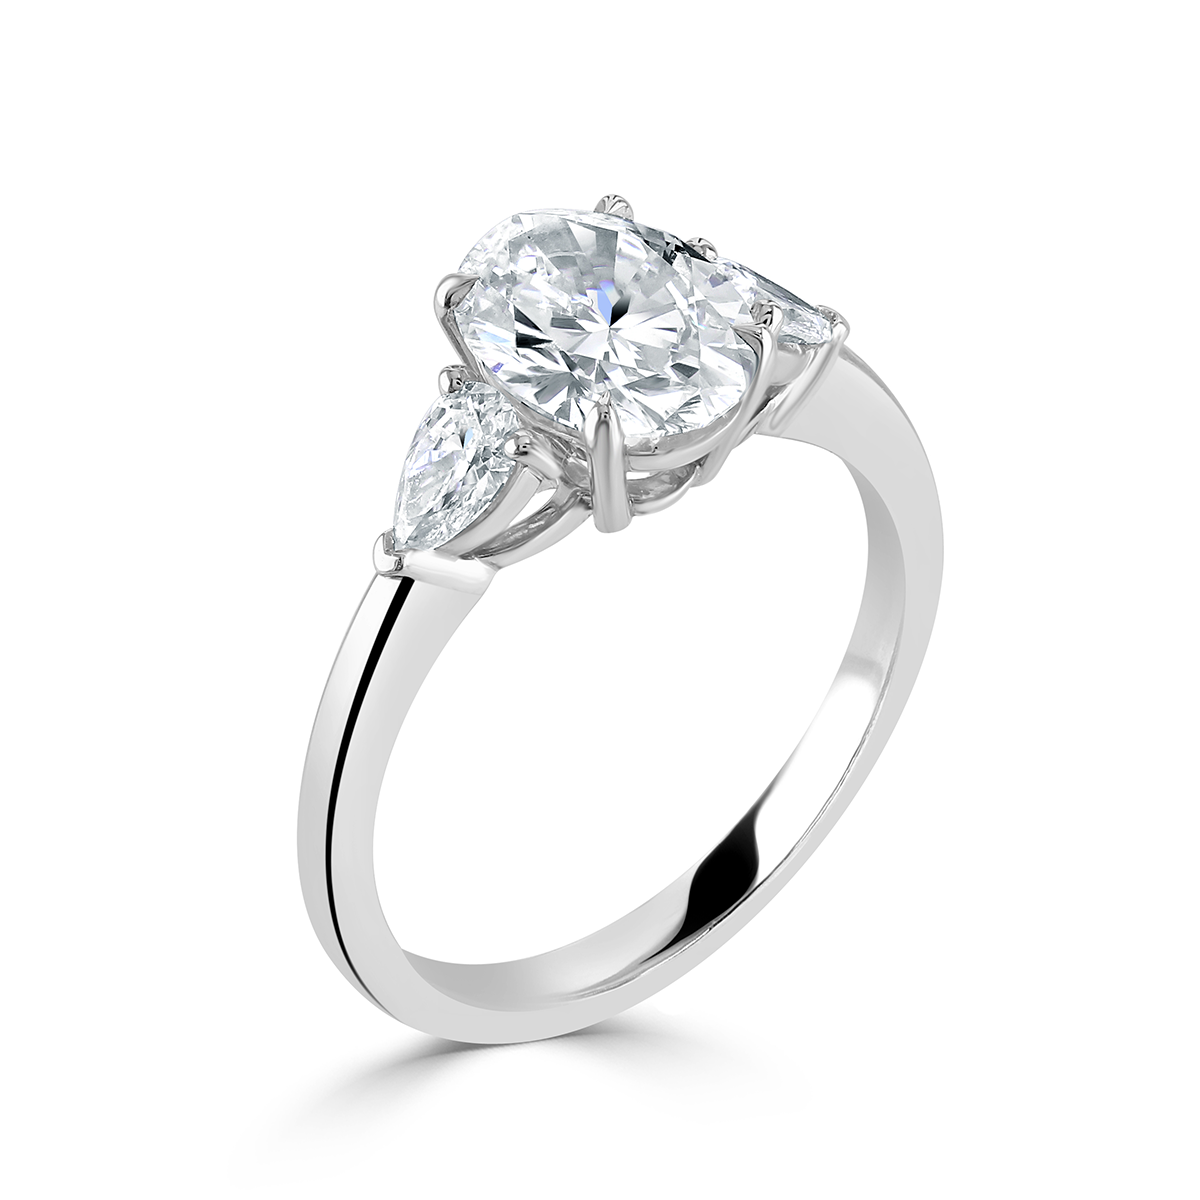 DMR BRIDAL: New Engagement Rings